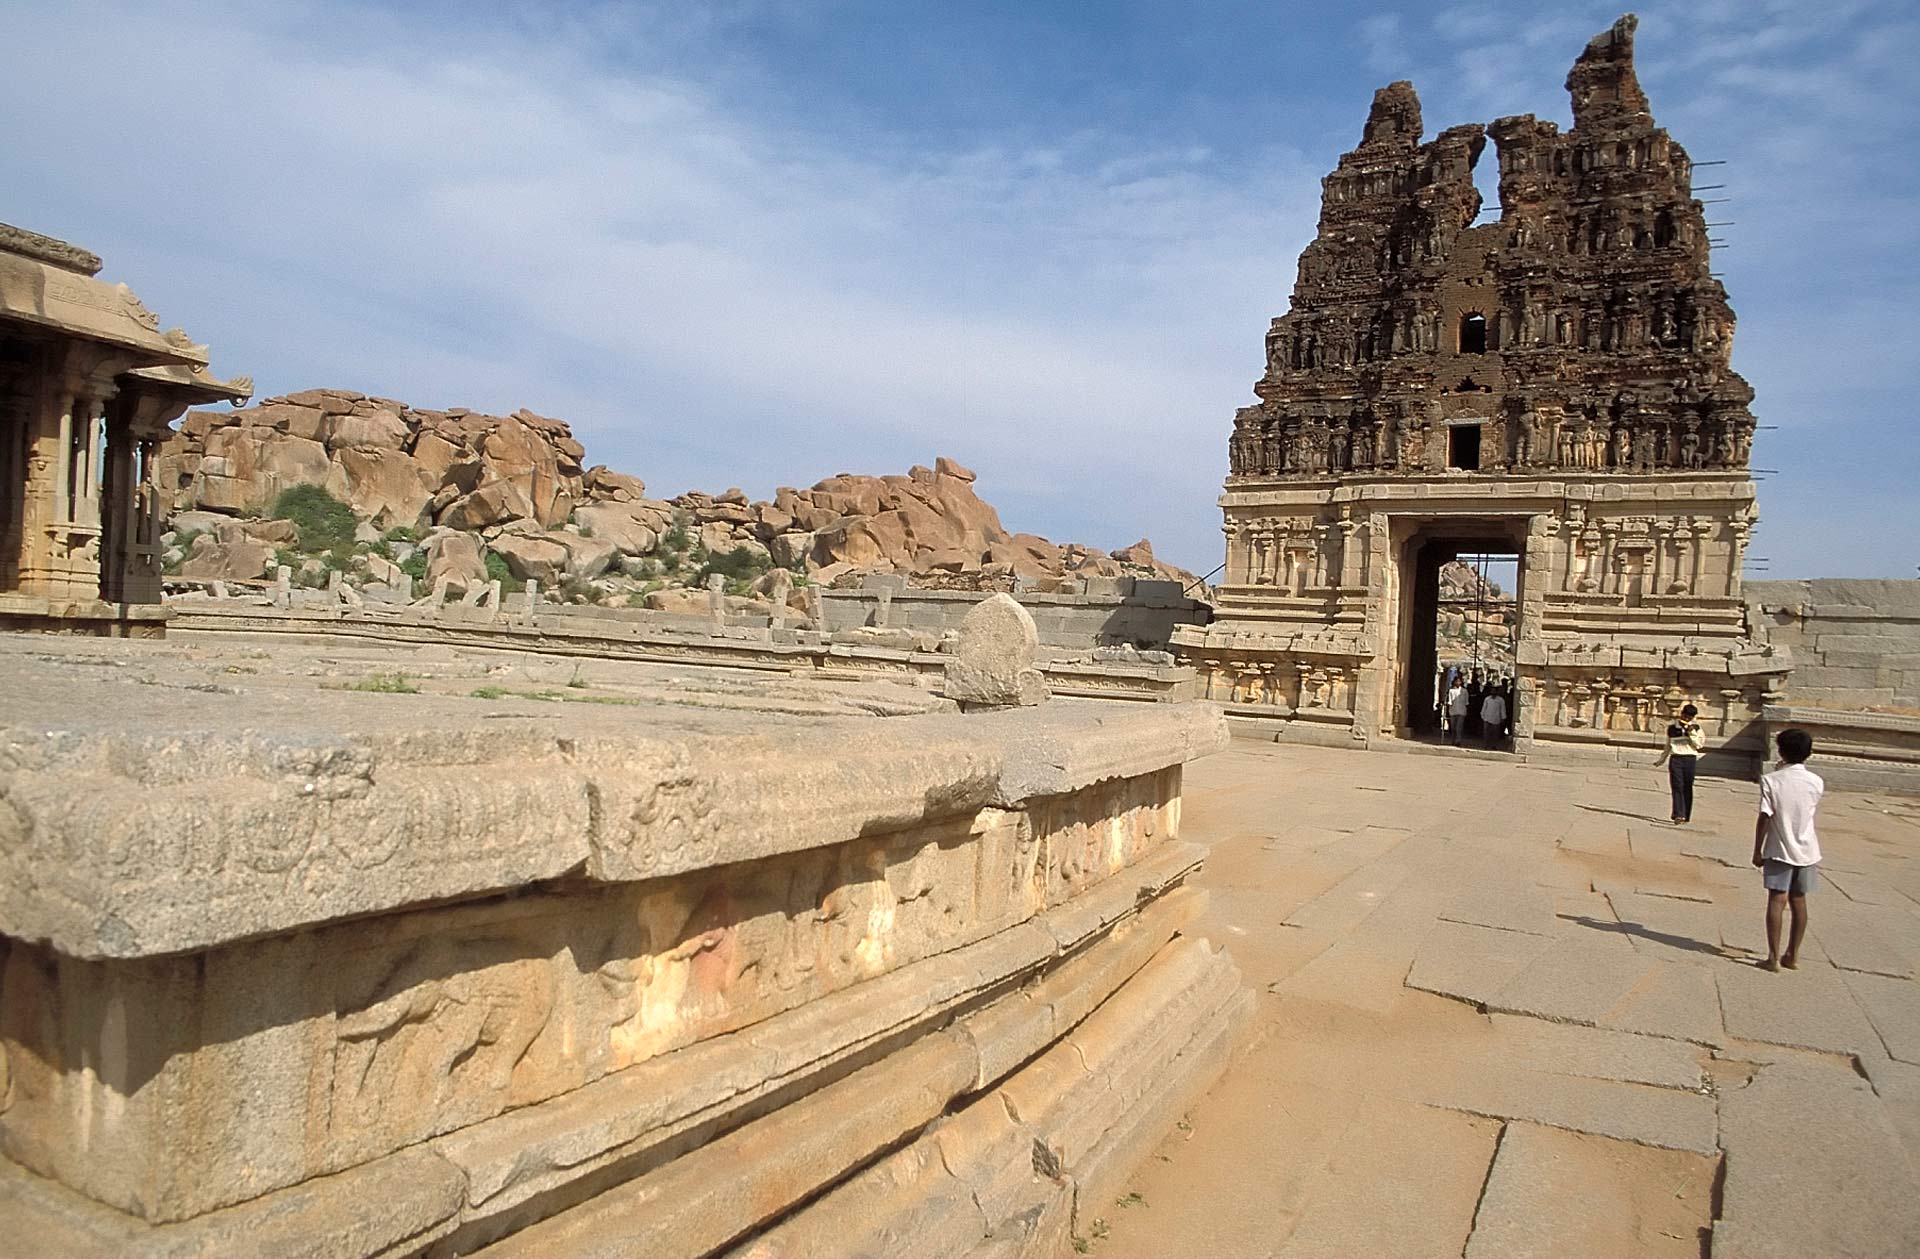 Courtyard and south entrance gate of the Vittala Temple, Hampi, Karnataka, India